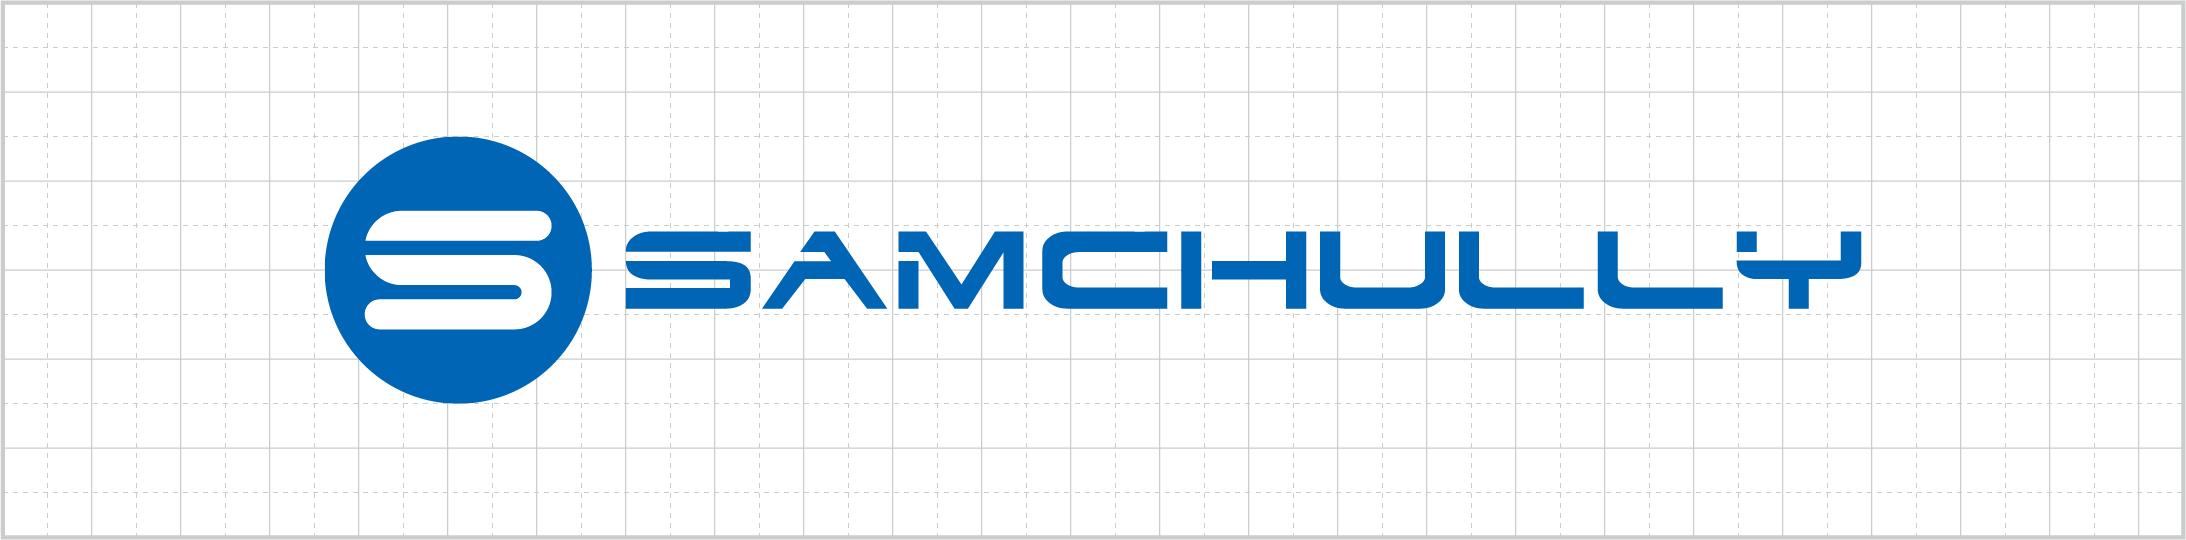 Samchully Workholding, Inc.